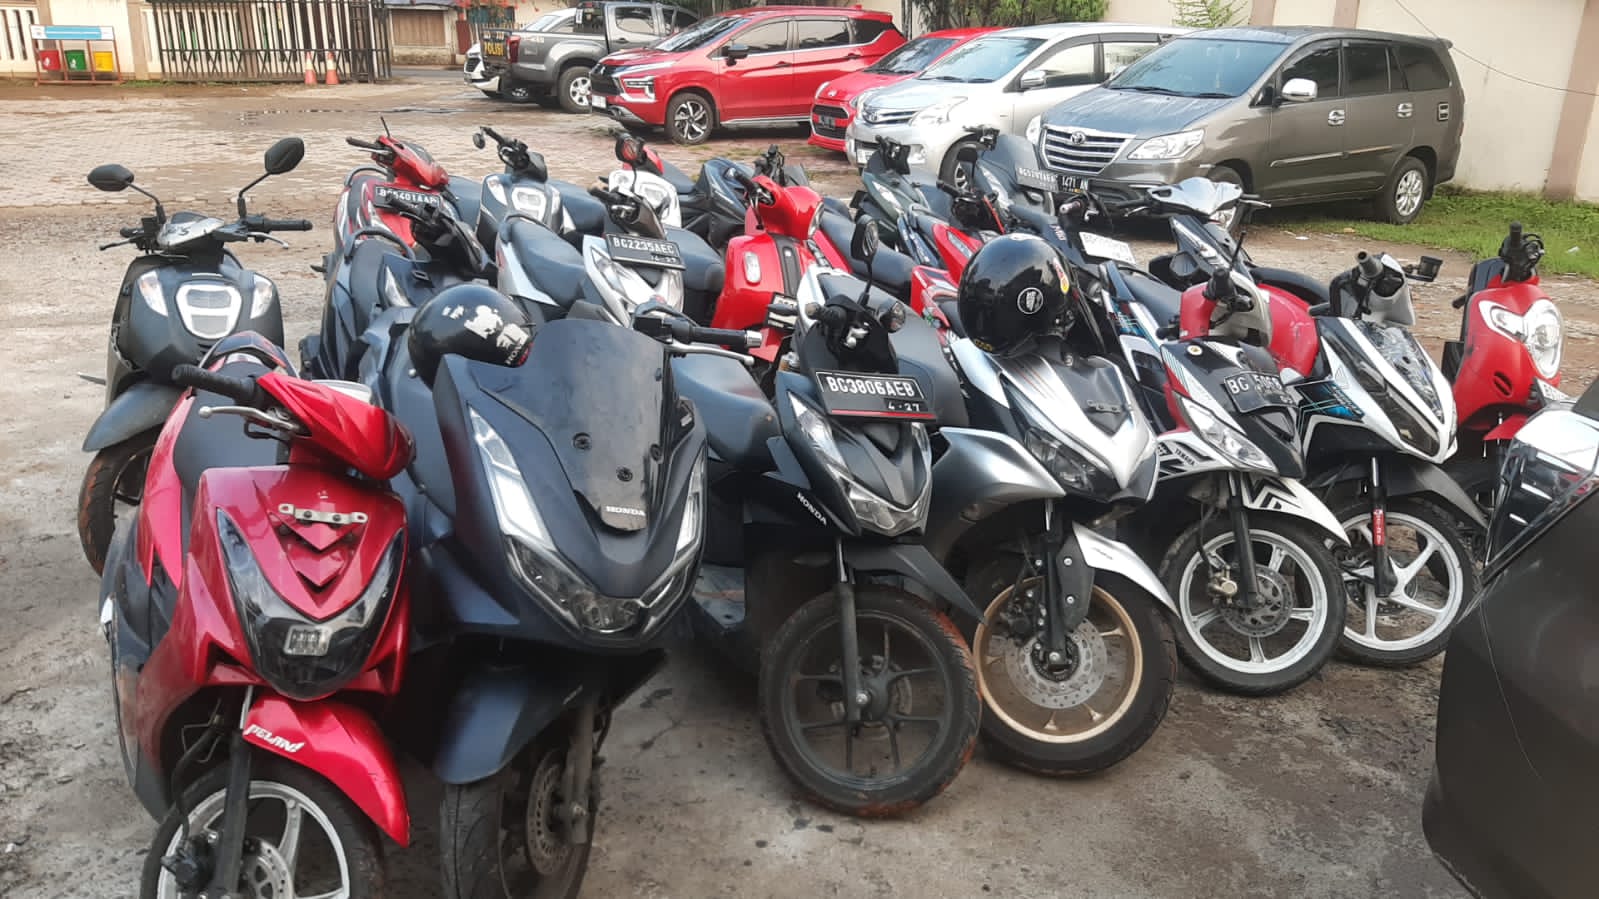 KRYD di Kota Palembang, Polisi Amankan Narkoba, Puluhan Sepeda Motor hingga Pelaku Tawuran 